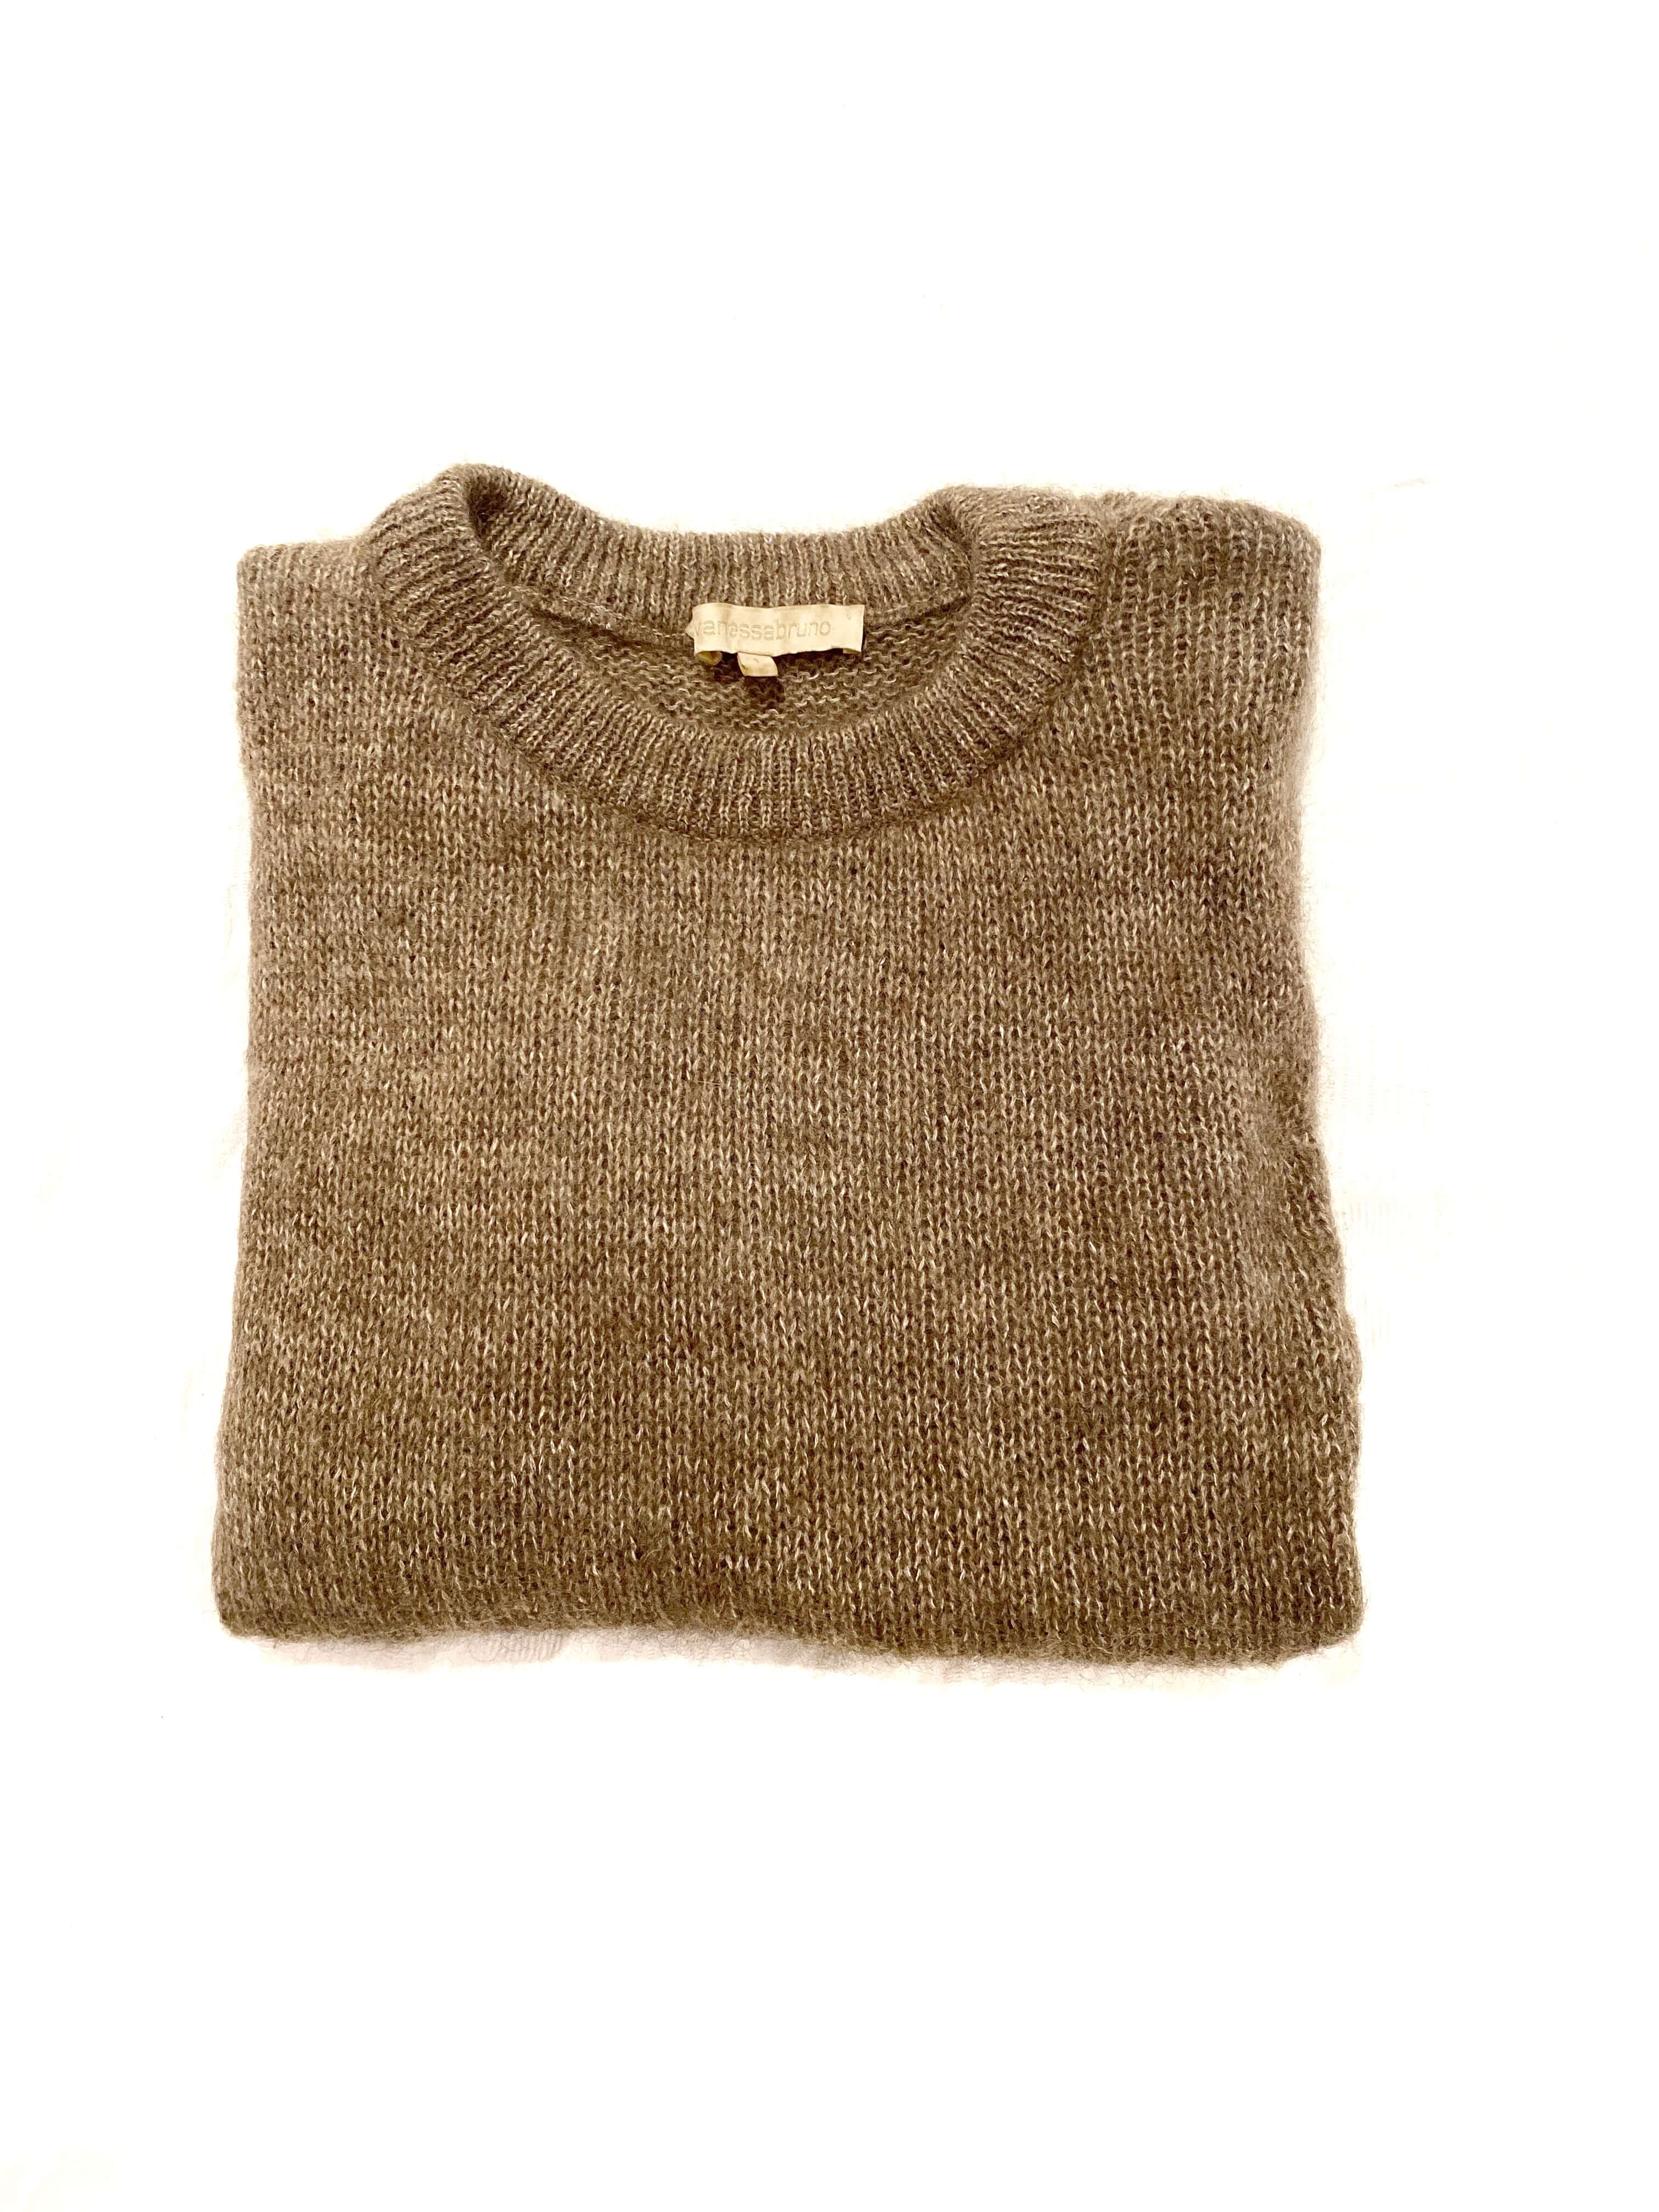 vanessa bruno sweater, mohair, beige colour, size 1